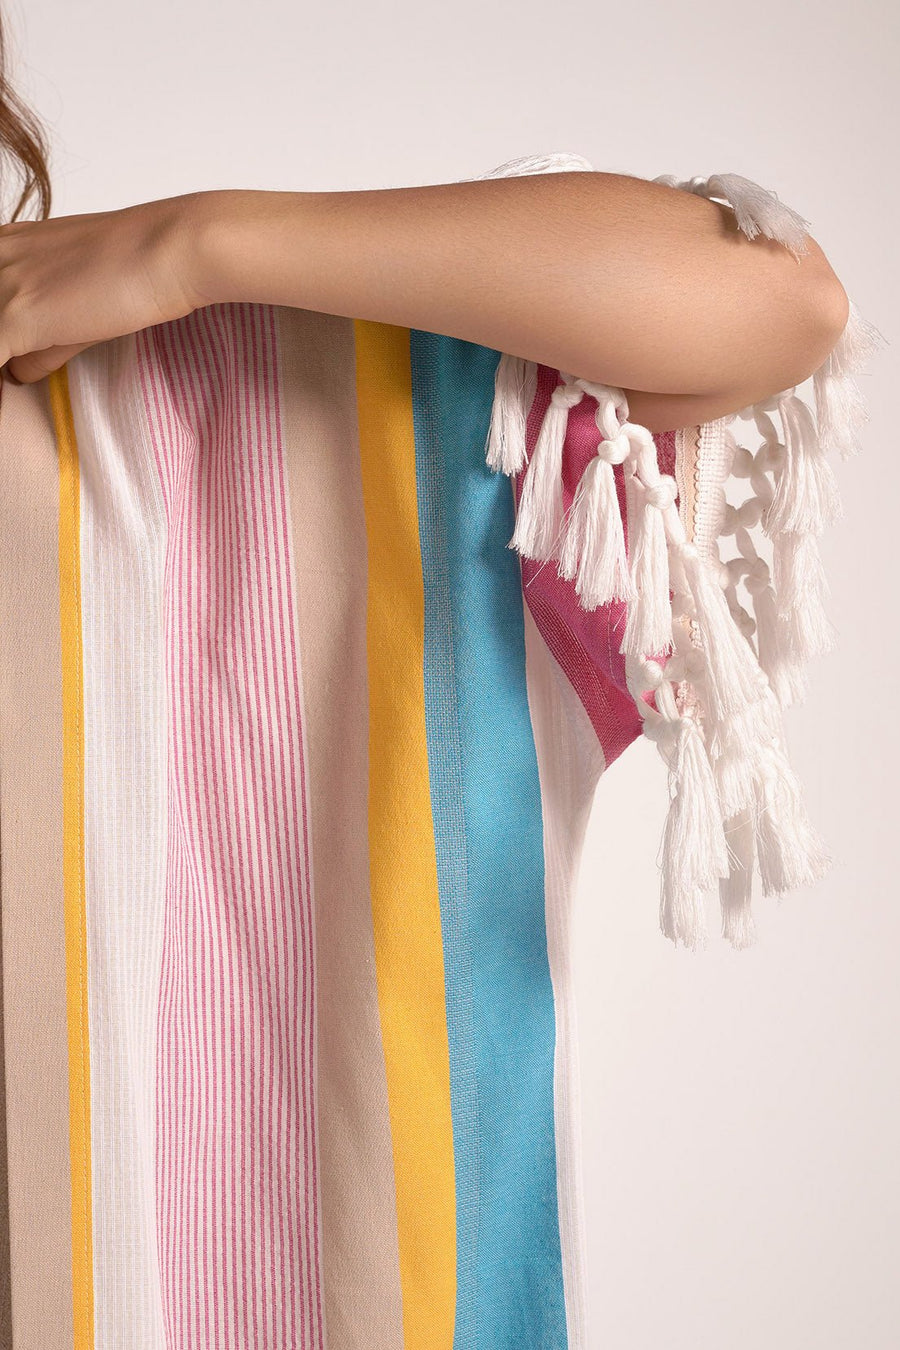 Pink & White stripes Kimono - nahlaelalfydesigns